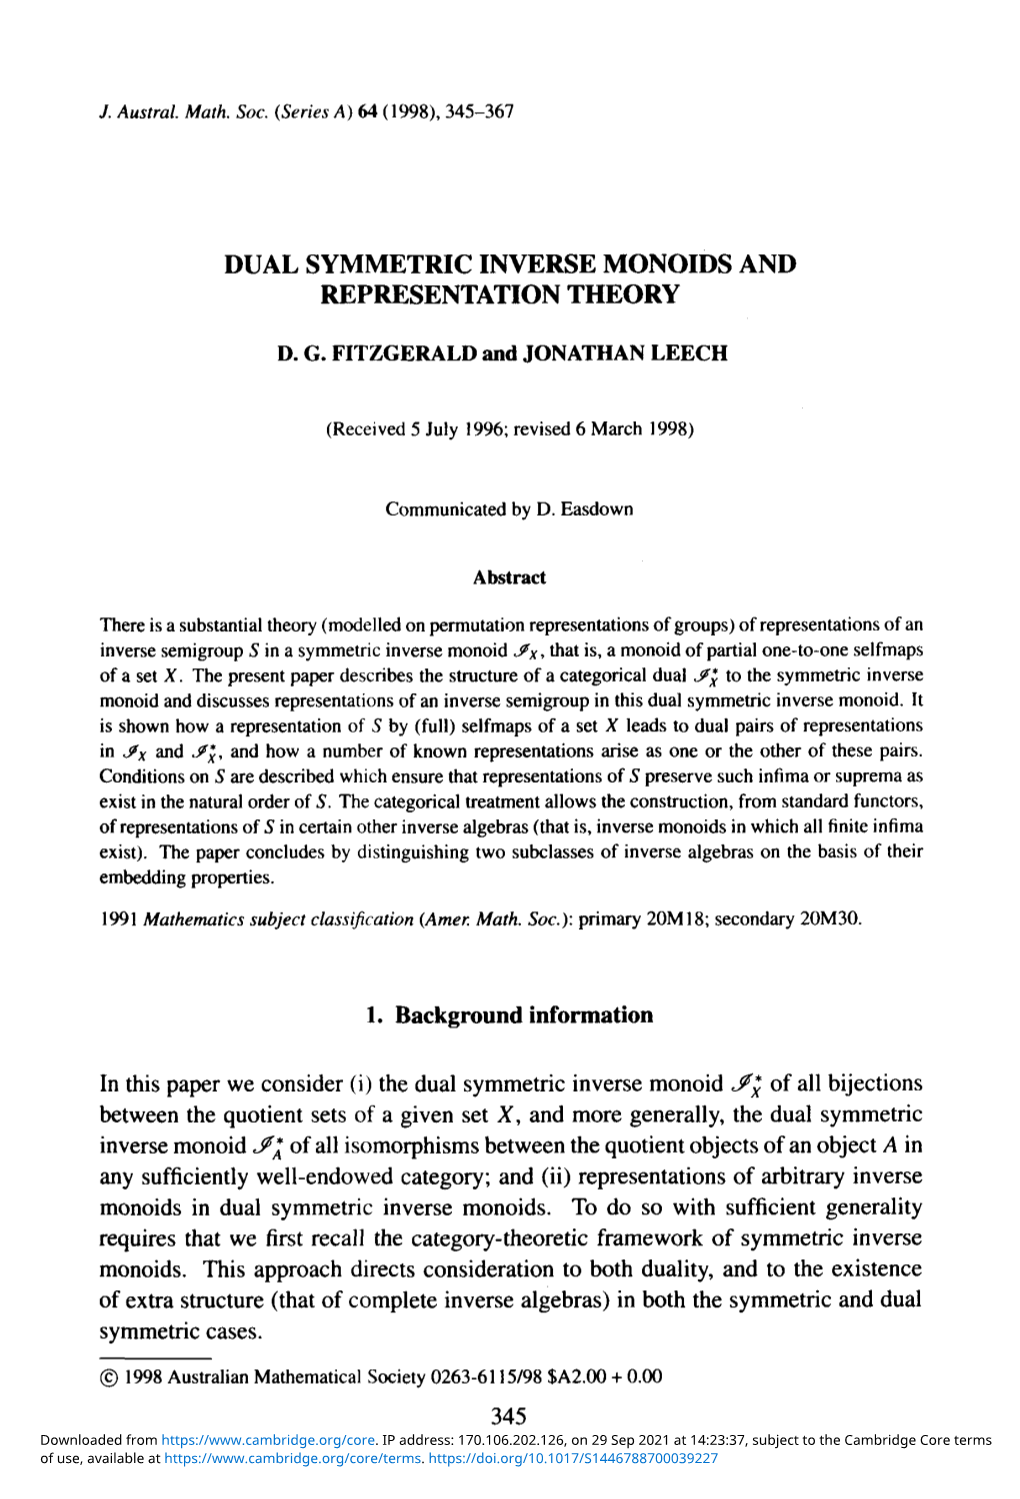 Dual Symmetric Inverse Monoids and Representation Theory